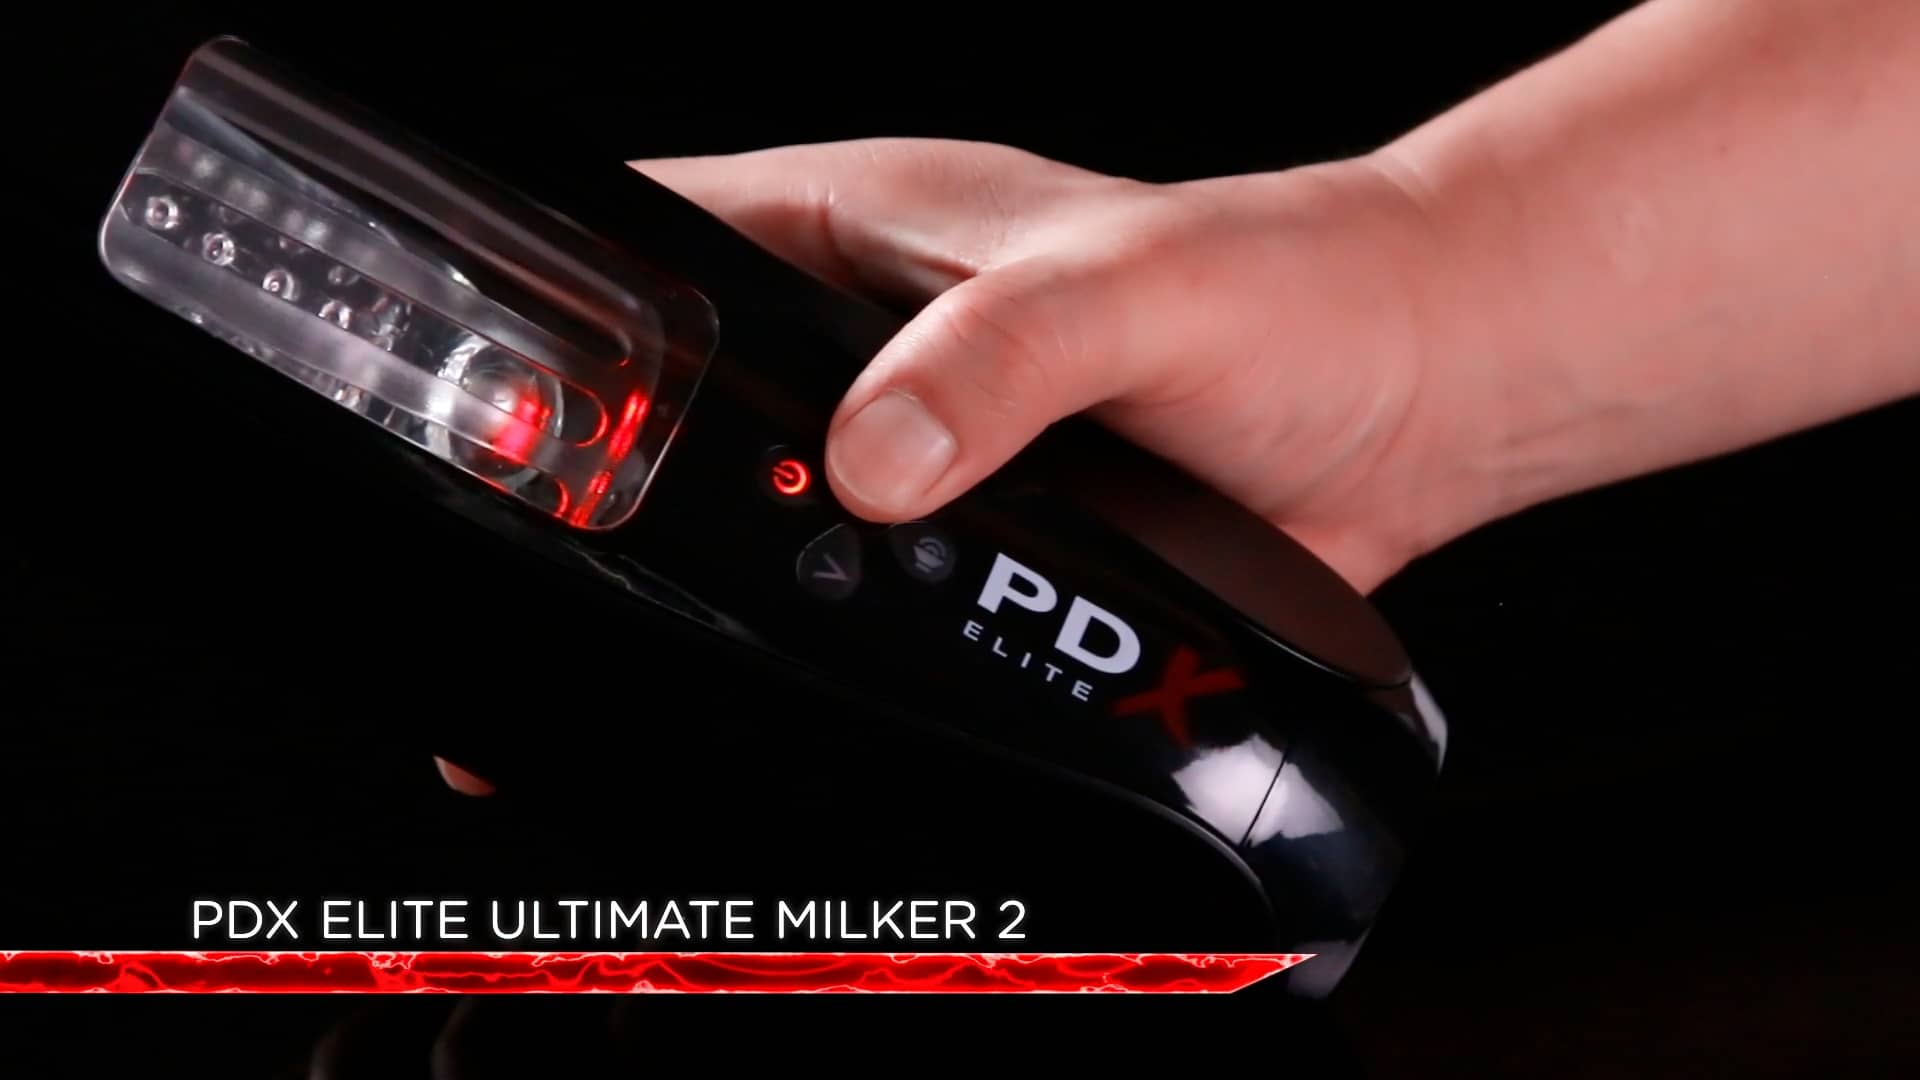 Rd539 Pdx Elite Ultimate Milker 2 Teaser On Vimeo